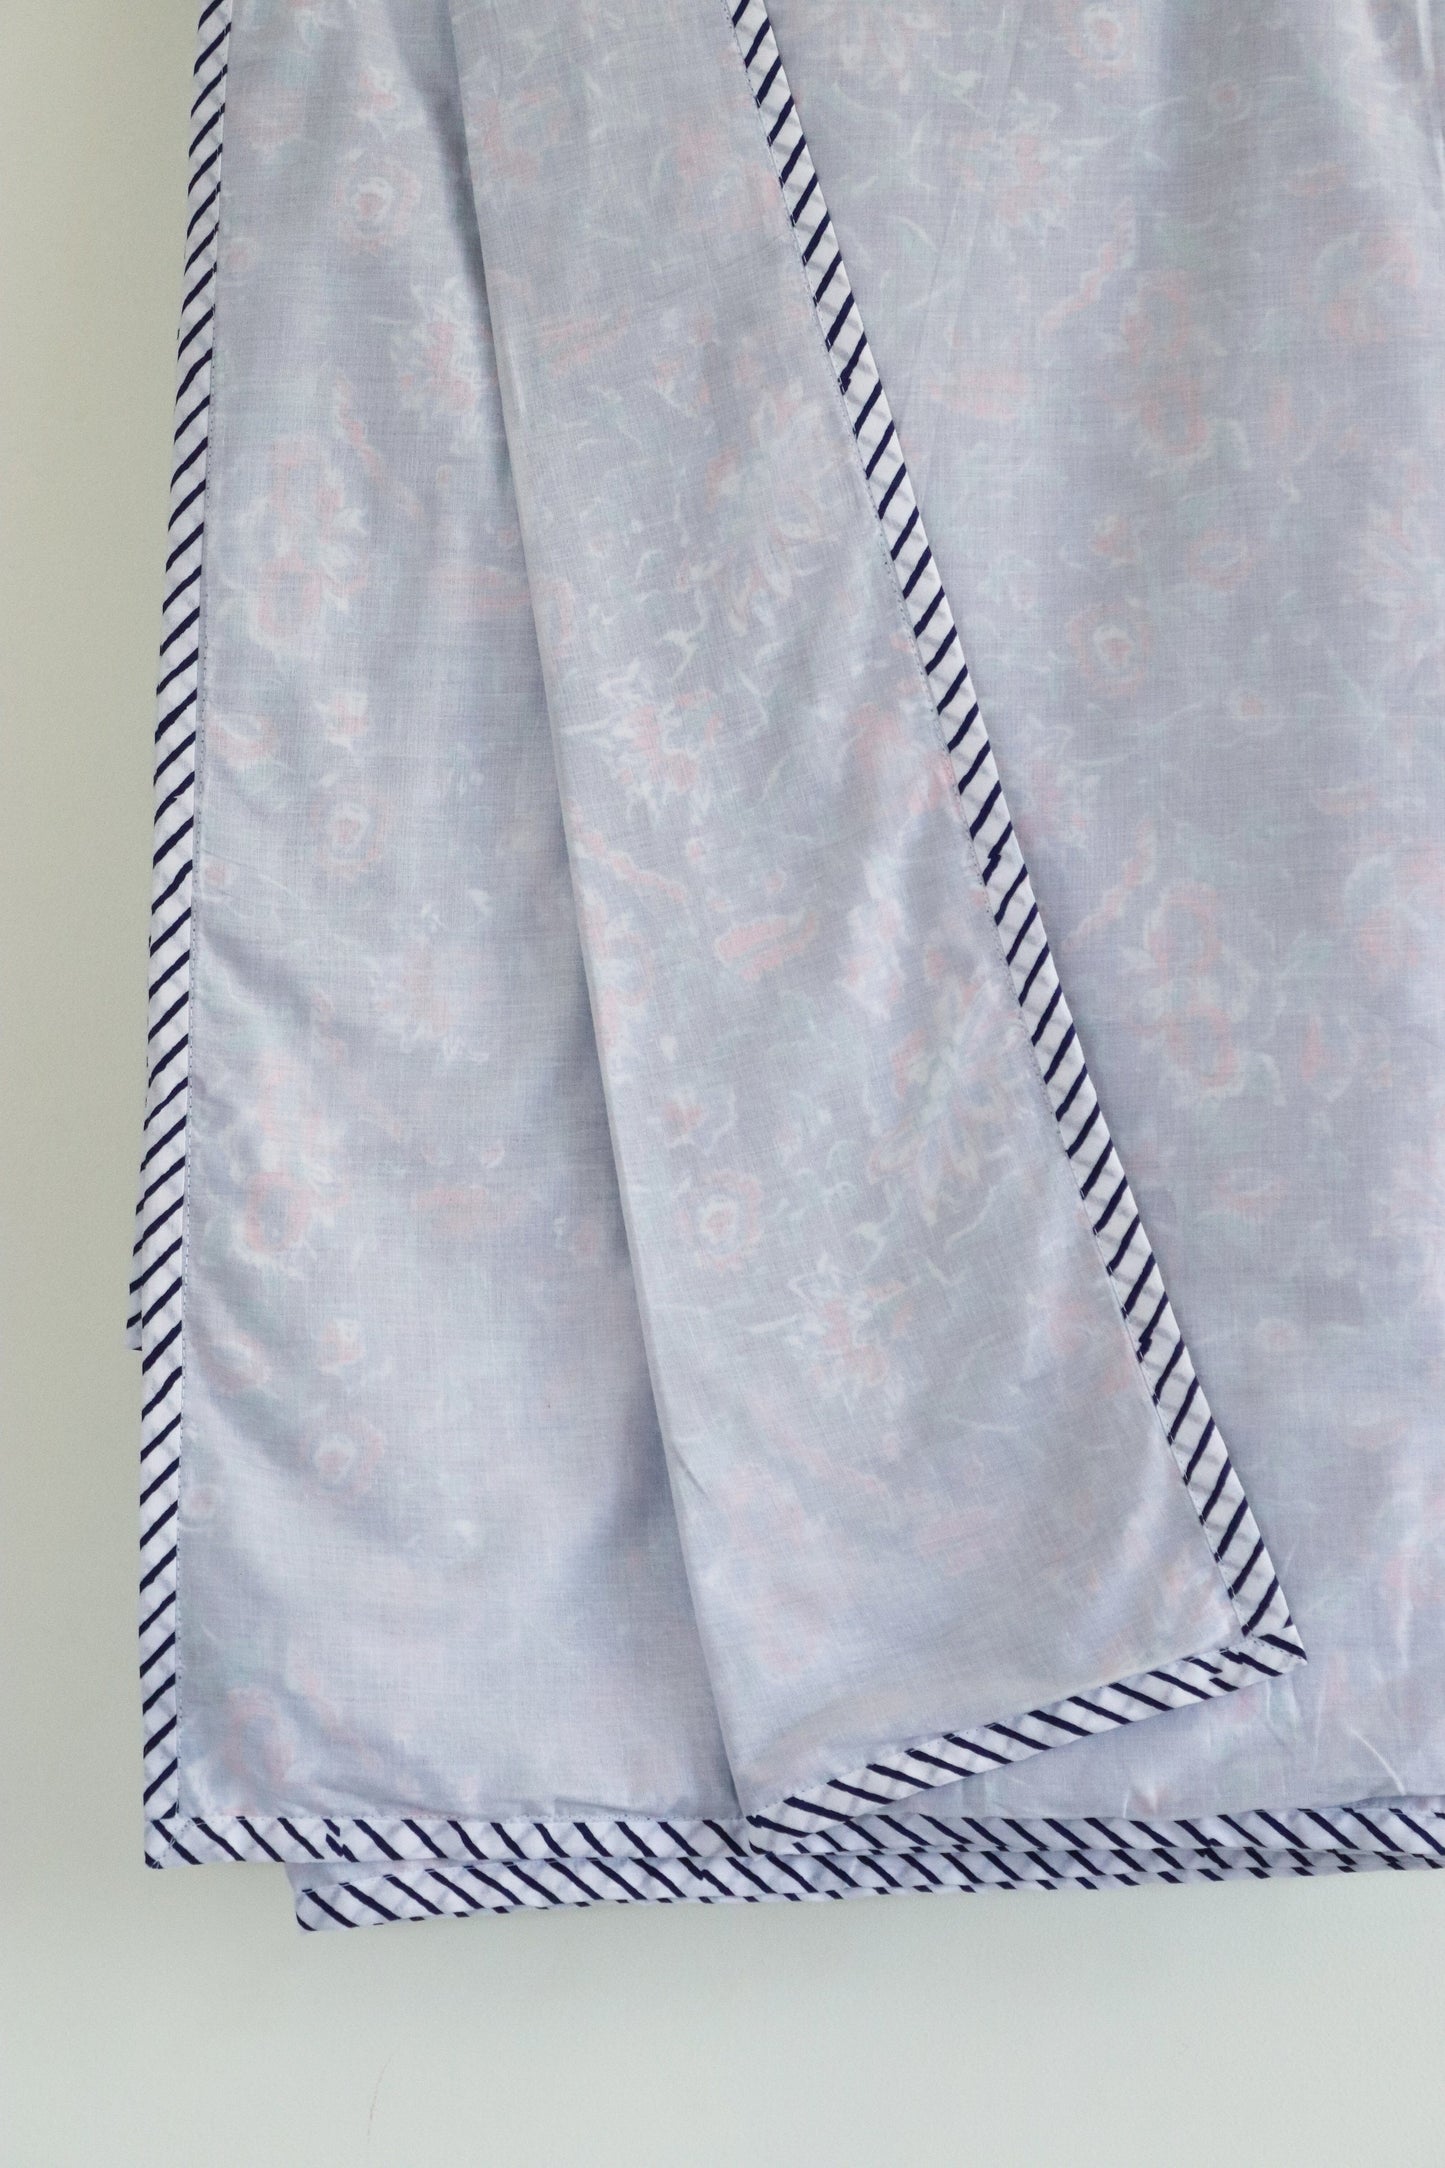 Single size AC Dohar - Block print cotton dohar - 60x90 inches - Mulmul Dohar blanket - three layers cotton fabric